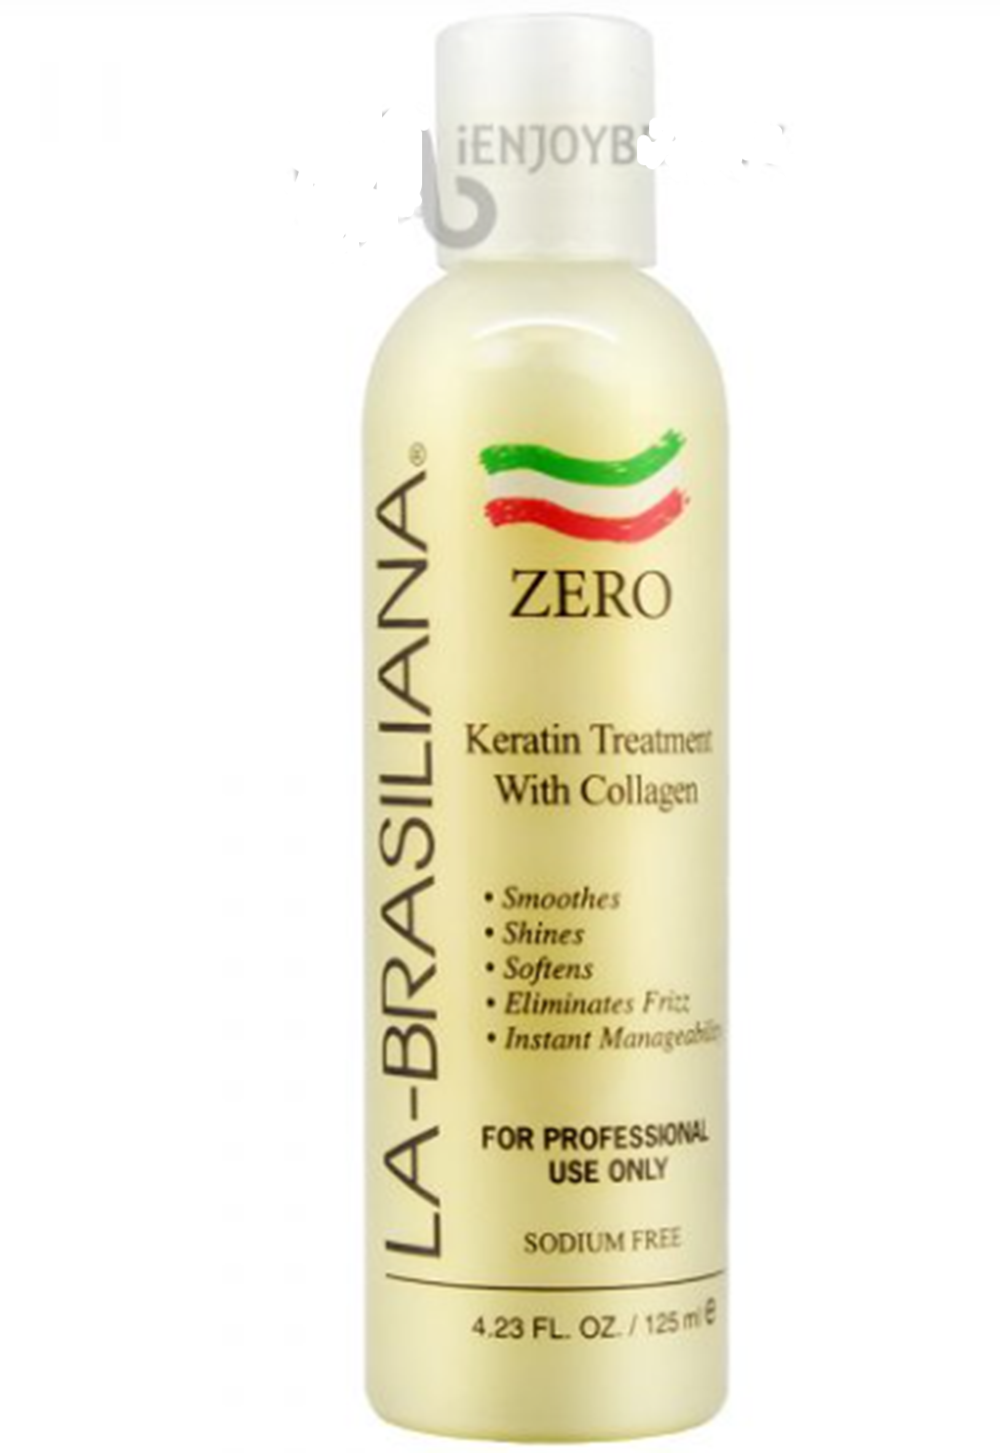 ZERO Keratin Treatment 4oz.